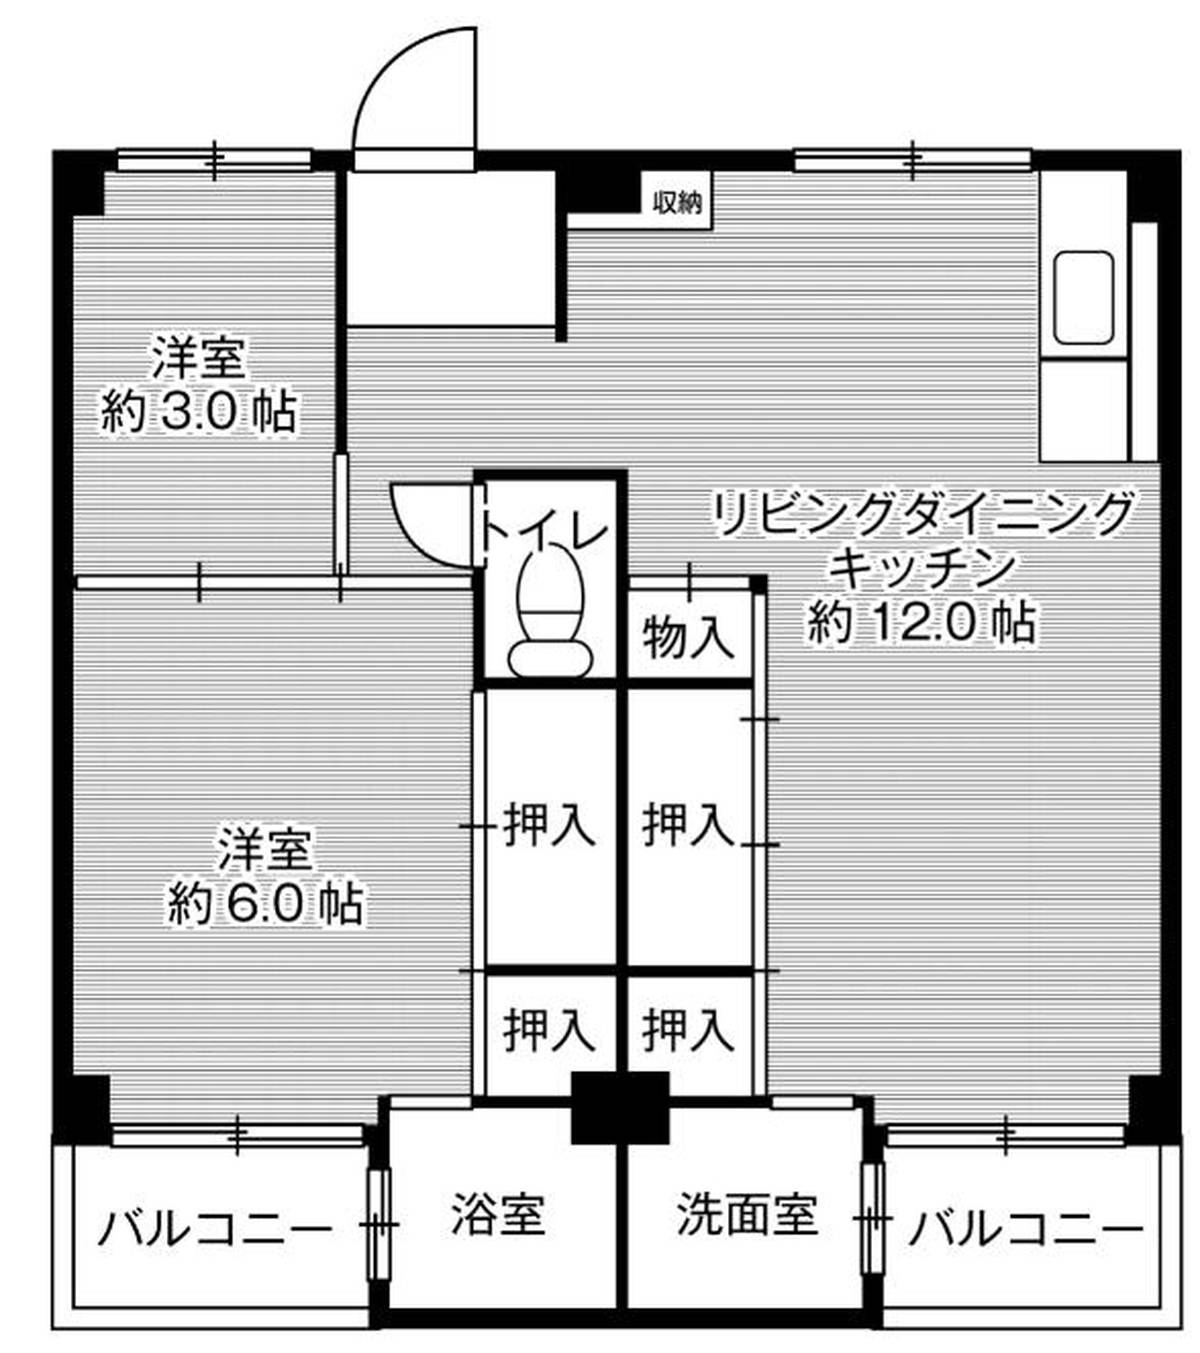 2LDK floorplan of Village House Fuseya in Izumi-shi